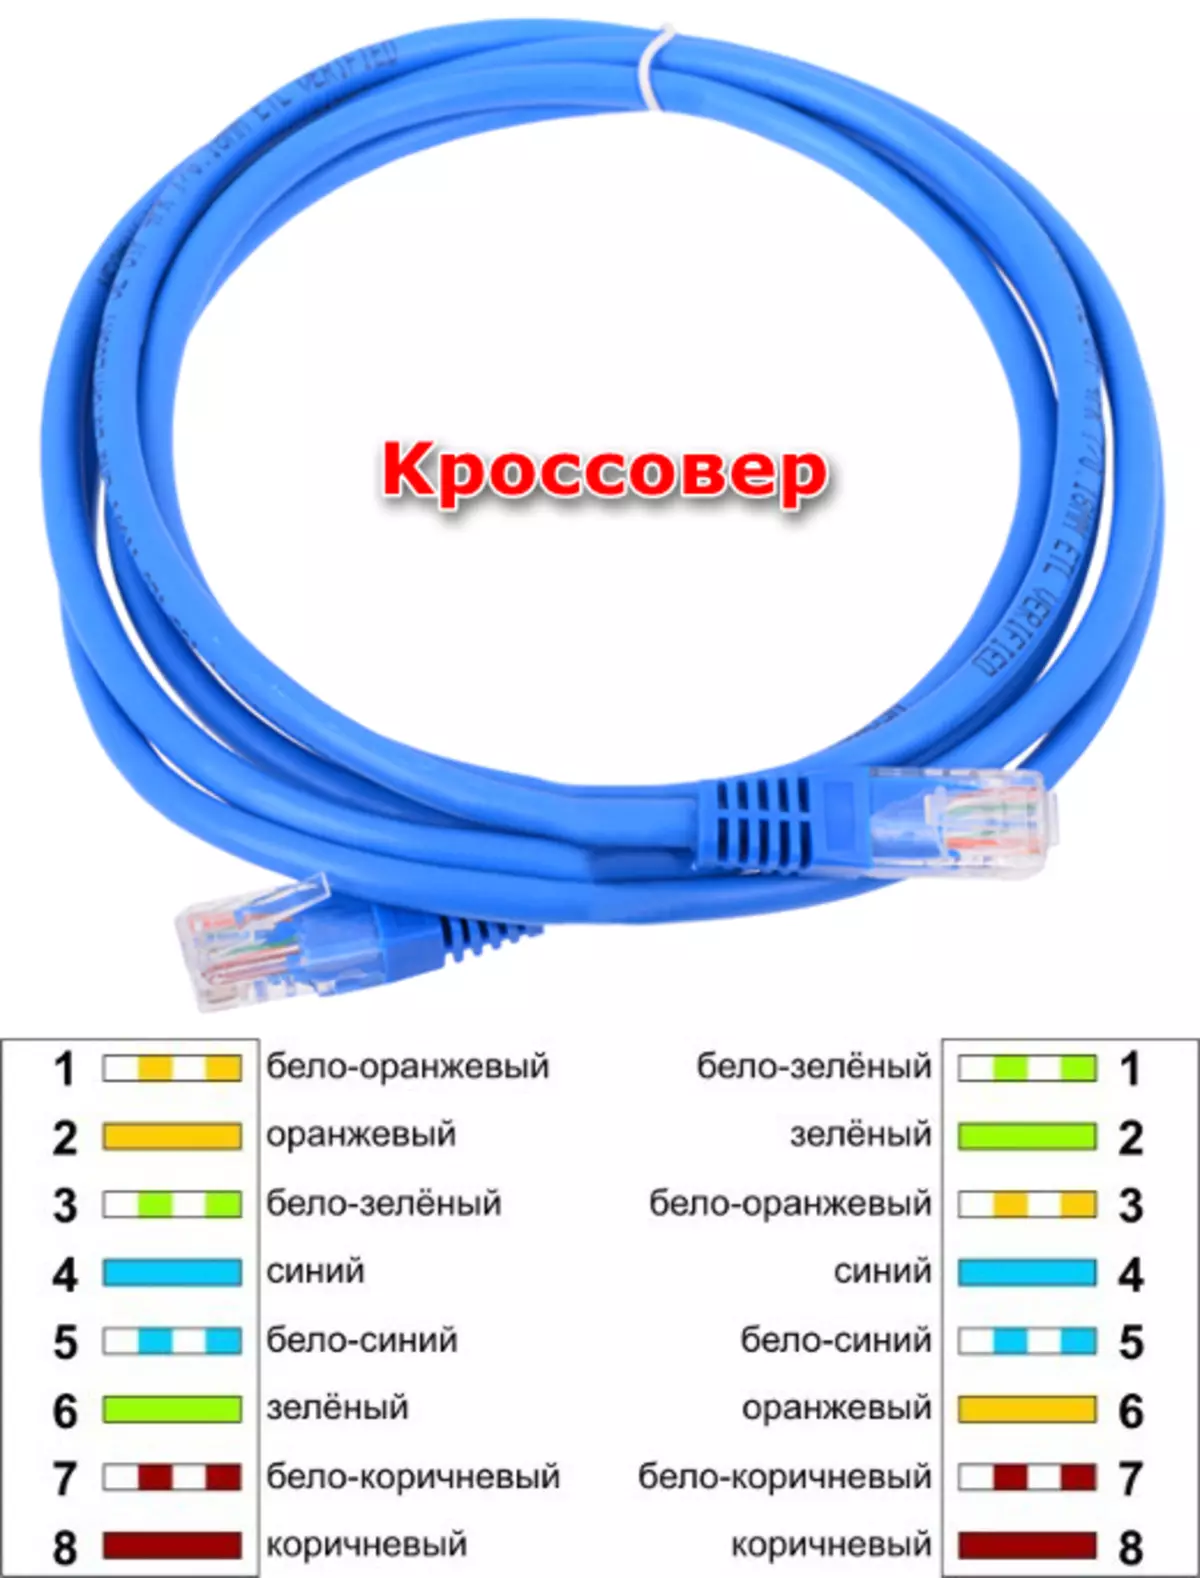 Cable de conexión cruzada para crear una red local de dos computadoras